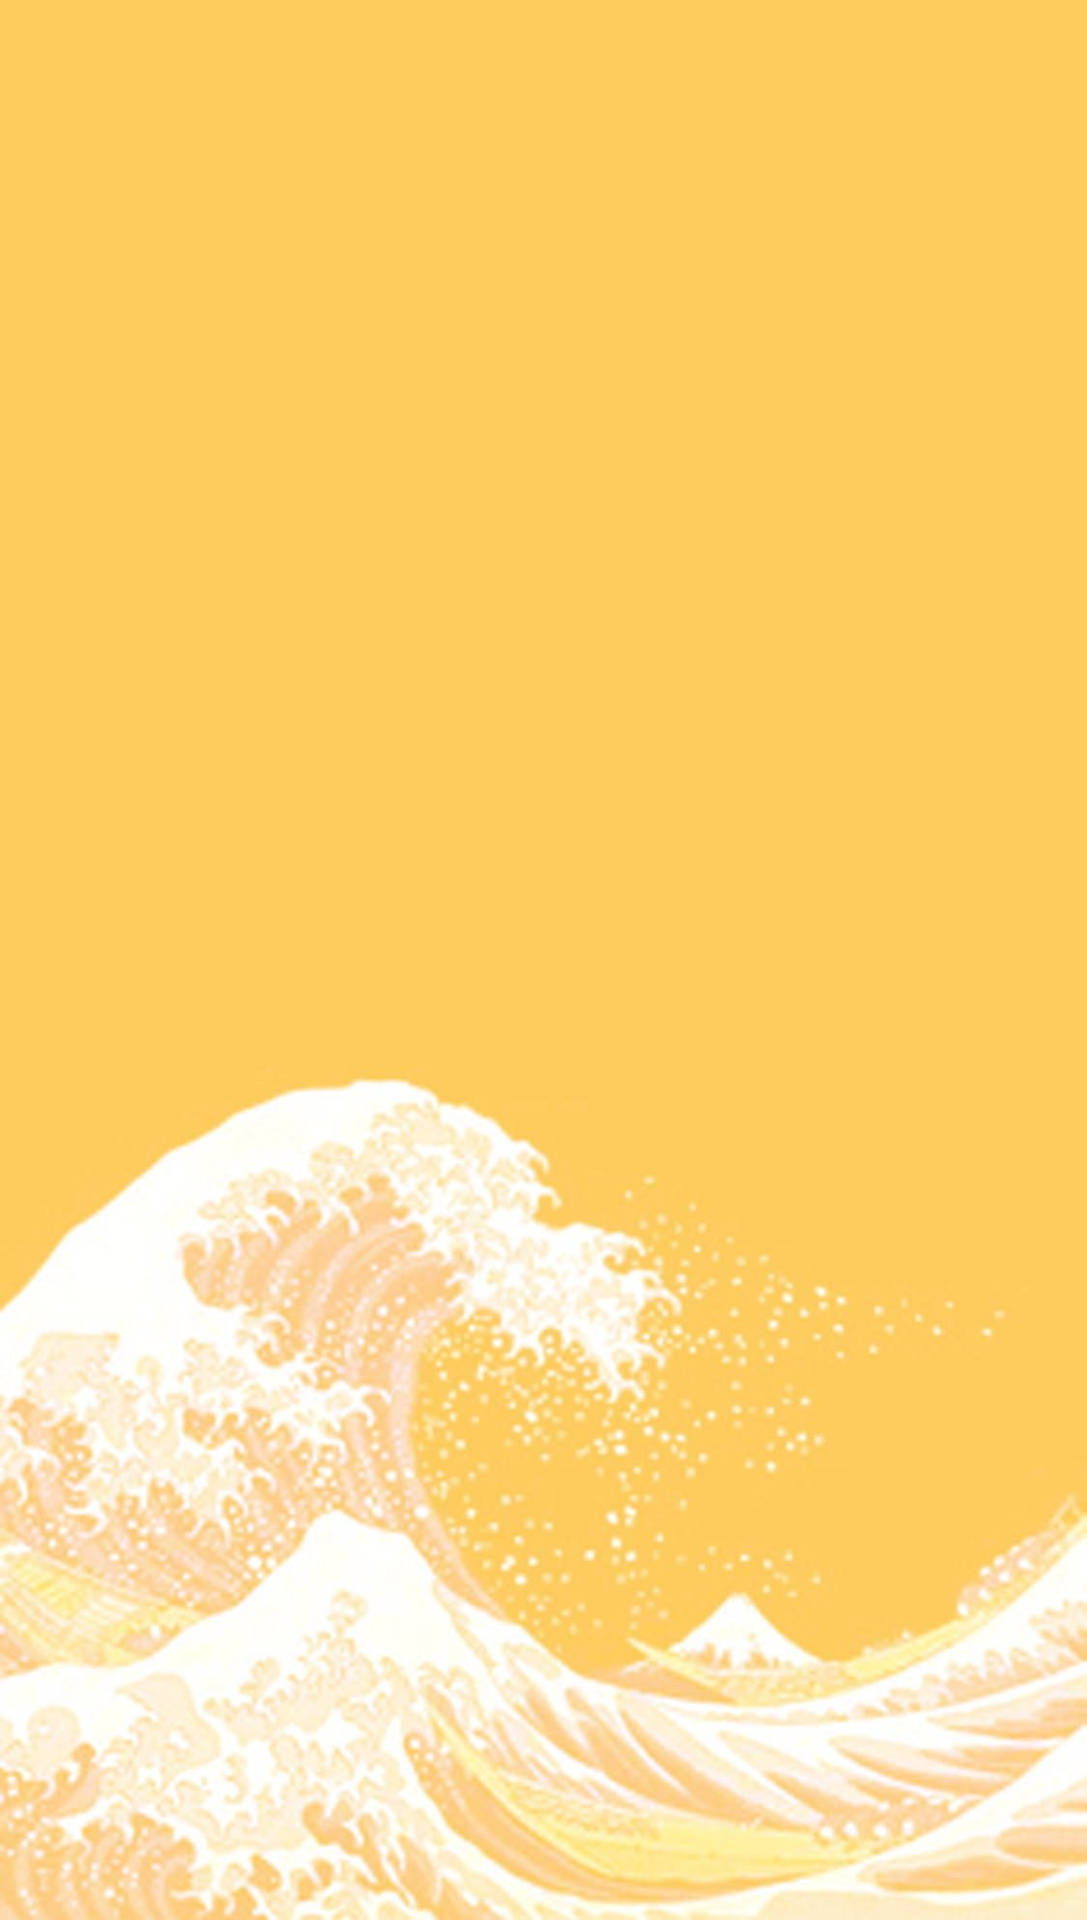 Waves Plain Yellow Iphone Wallpaper